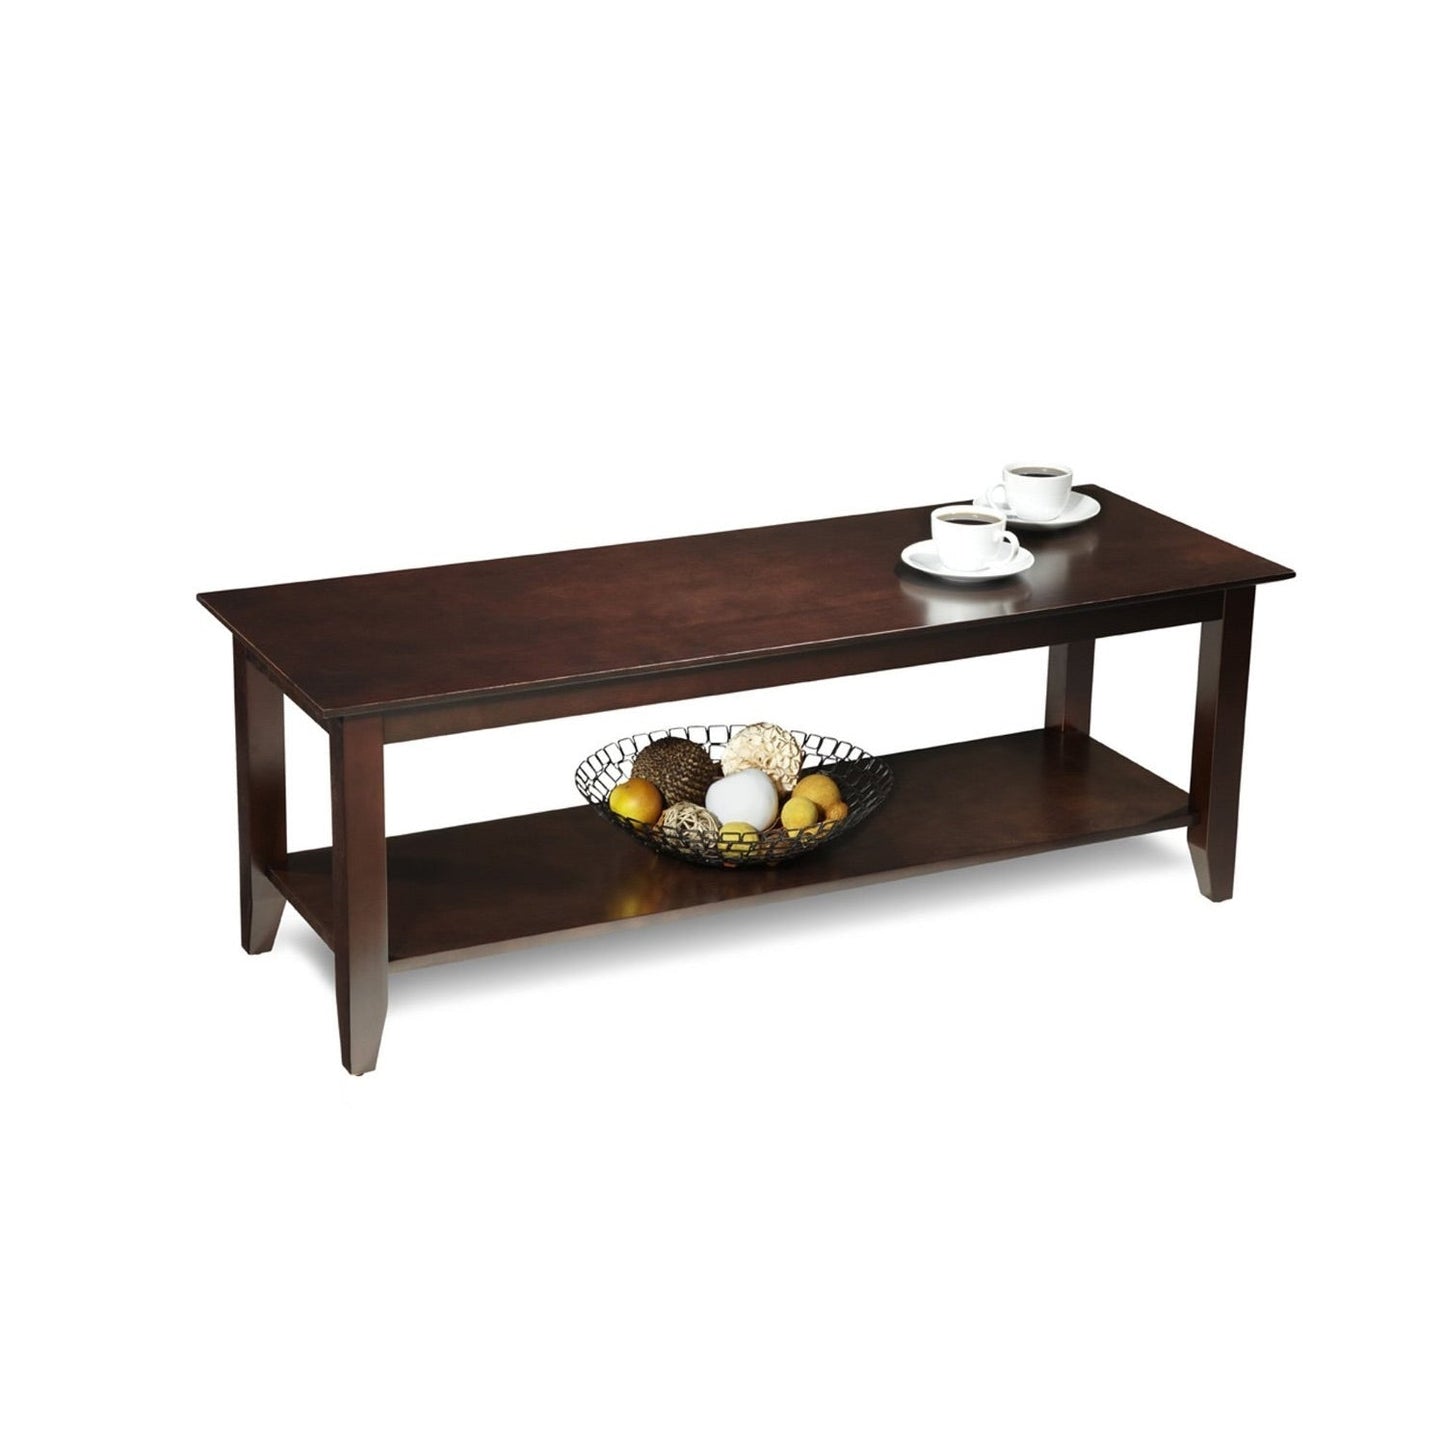 Living Room > Coffee Tables - Espresso Wood Grain Coffee Table With Bottom Shelf